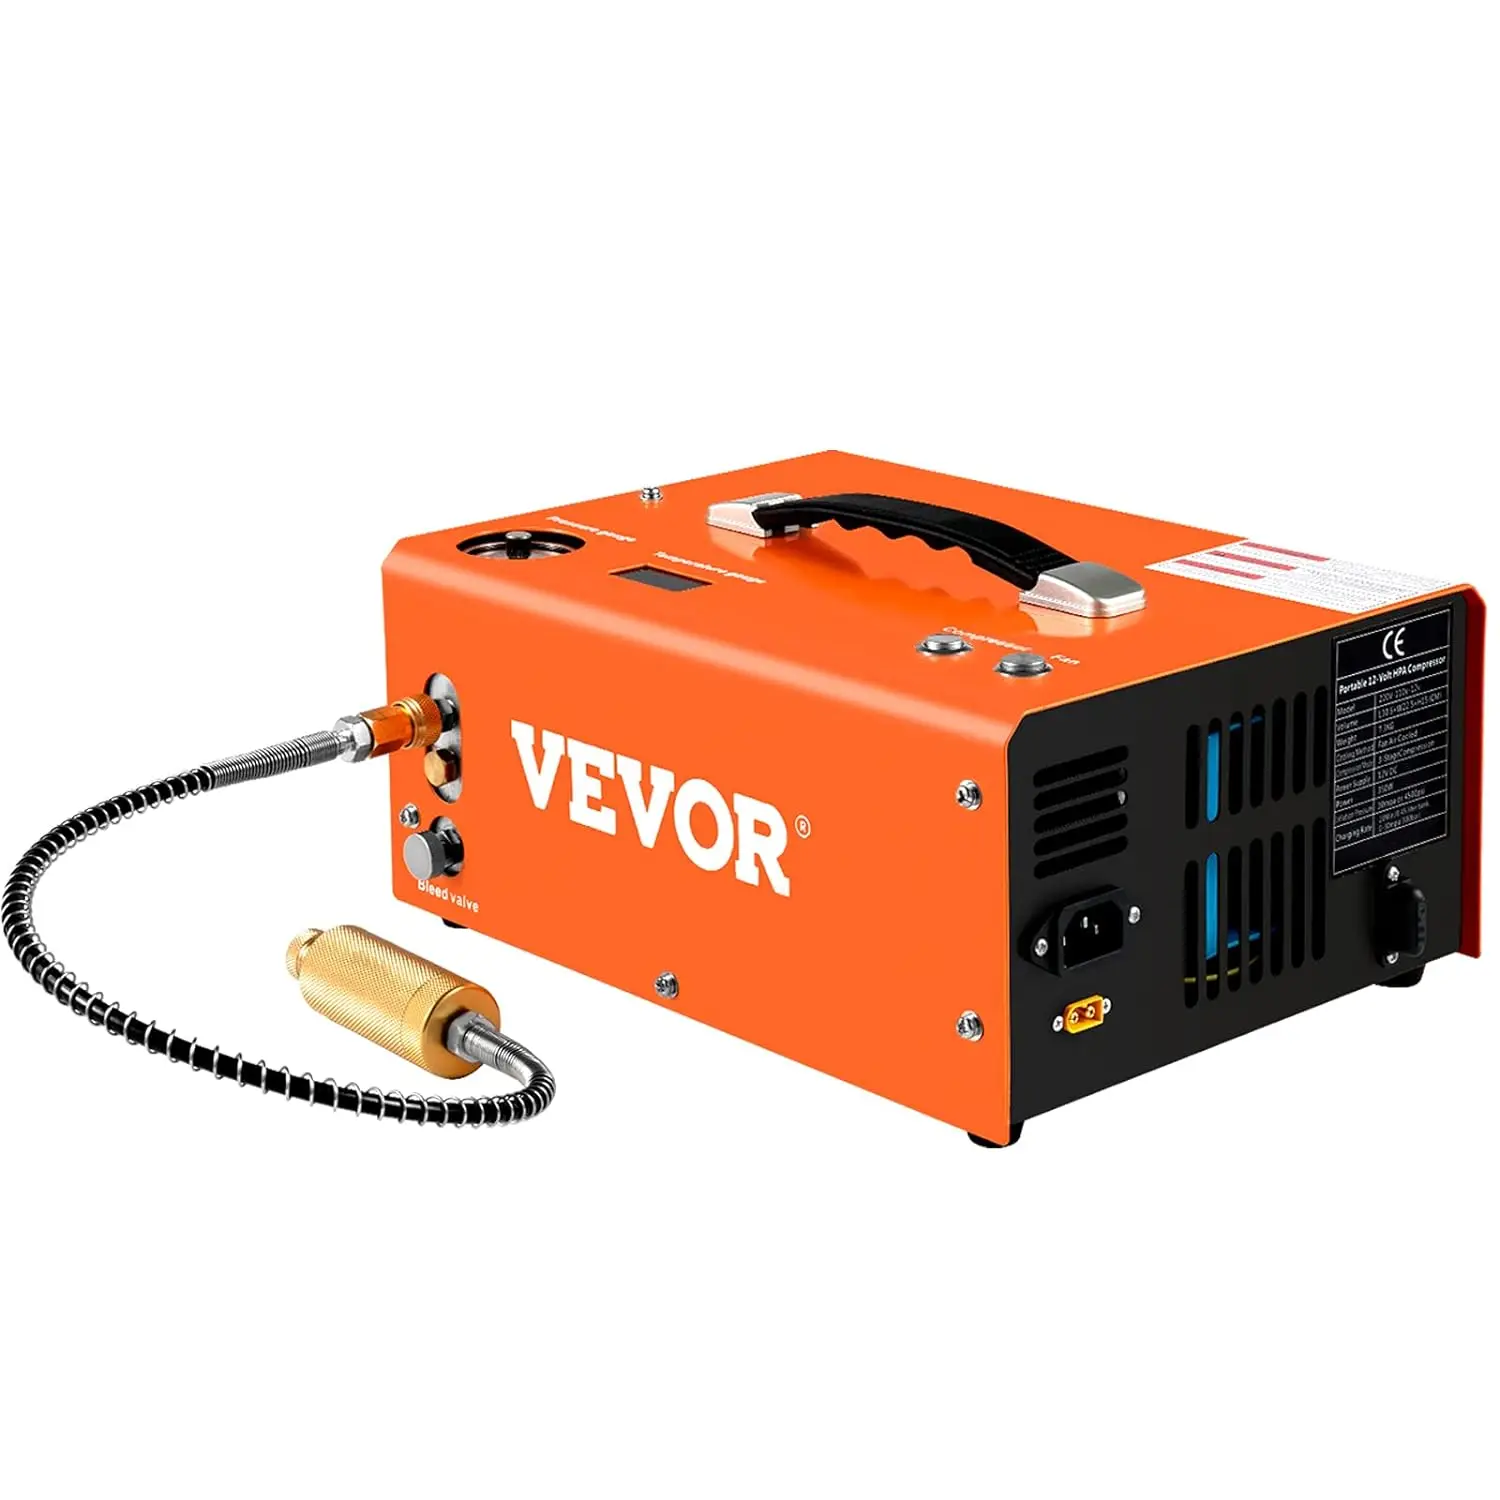 

VEVOR PCP Air Compressor,4500PSI Portable PCP Compressor,12V DC 110V/220V AC PCP Airgun Compressor Auto-stop,w/Built-in Adapter